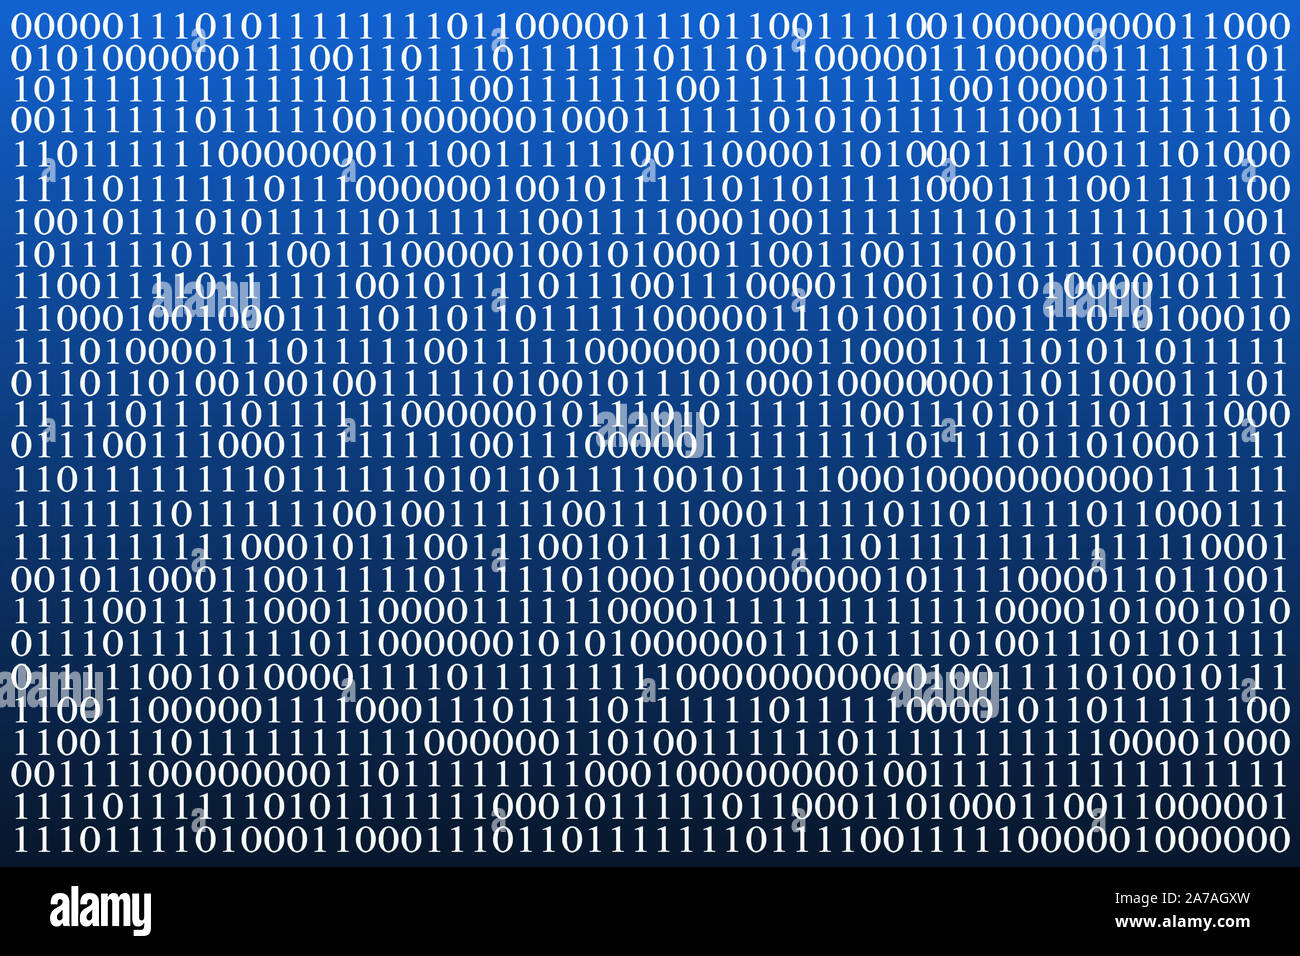 binary code background